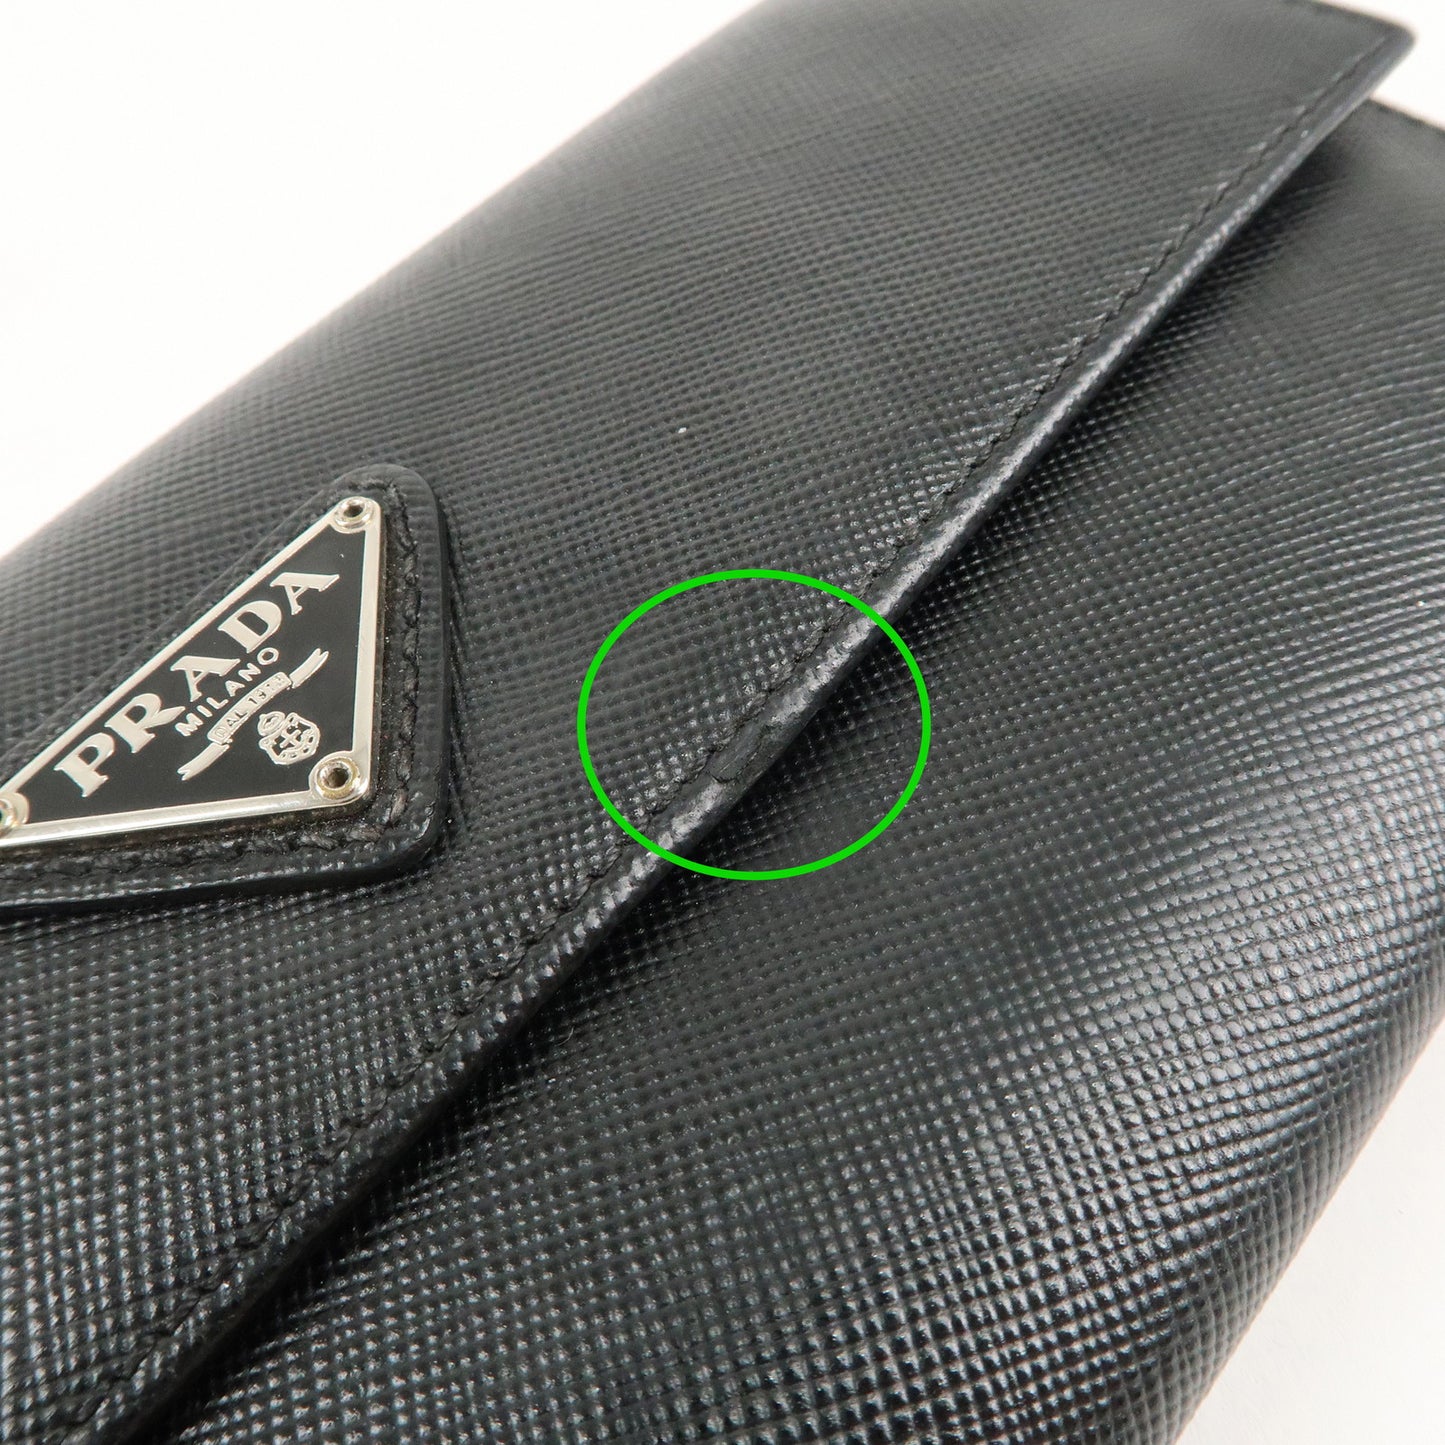 PRADA Logo Saffiano Leather Bi-fold Long Wallet Purse Black